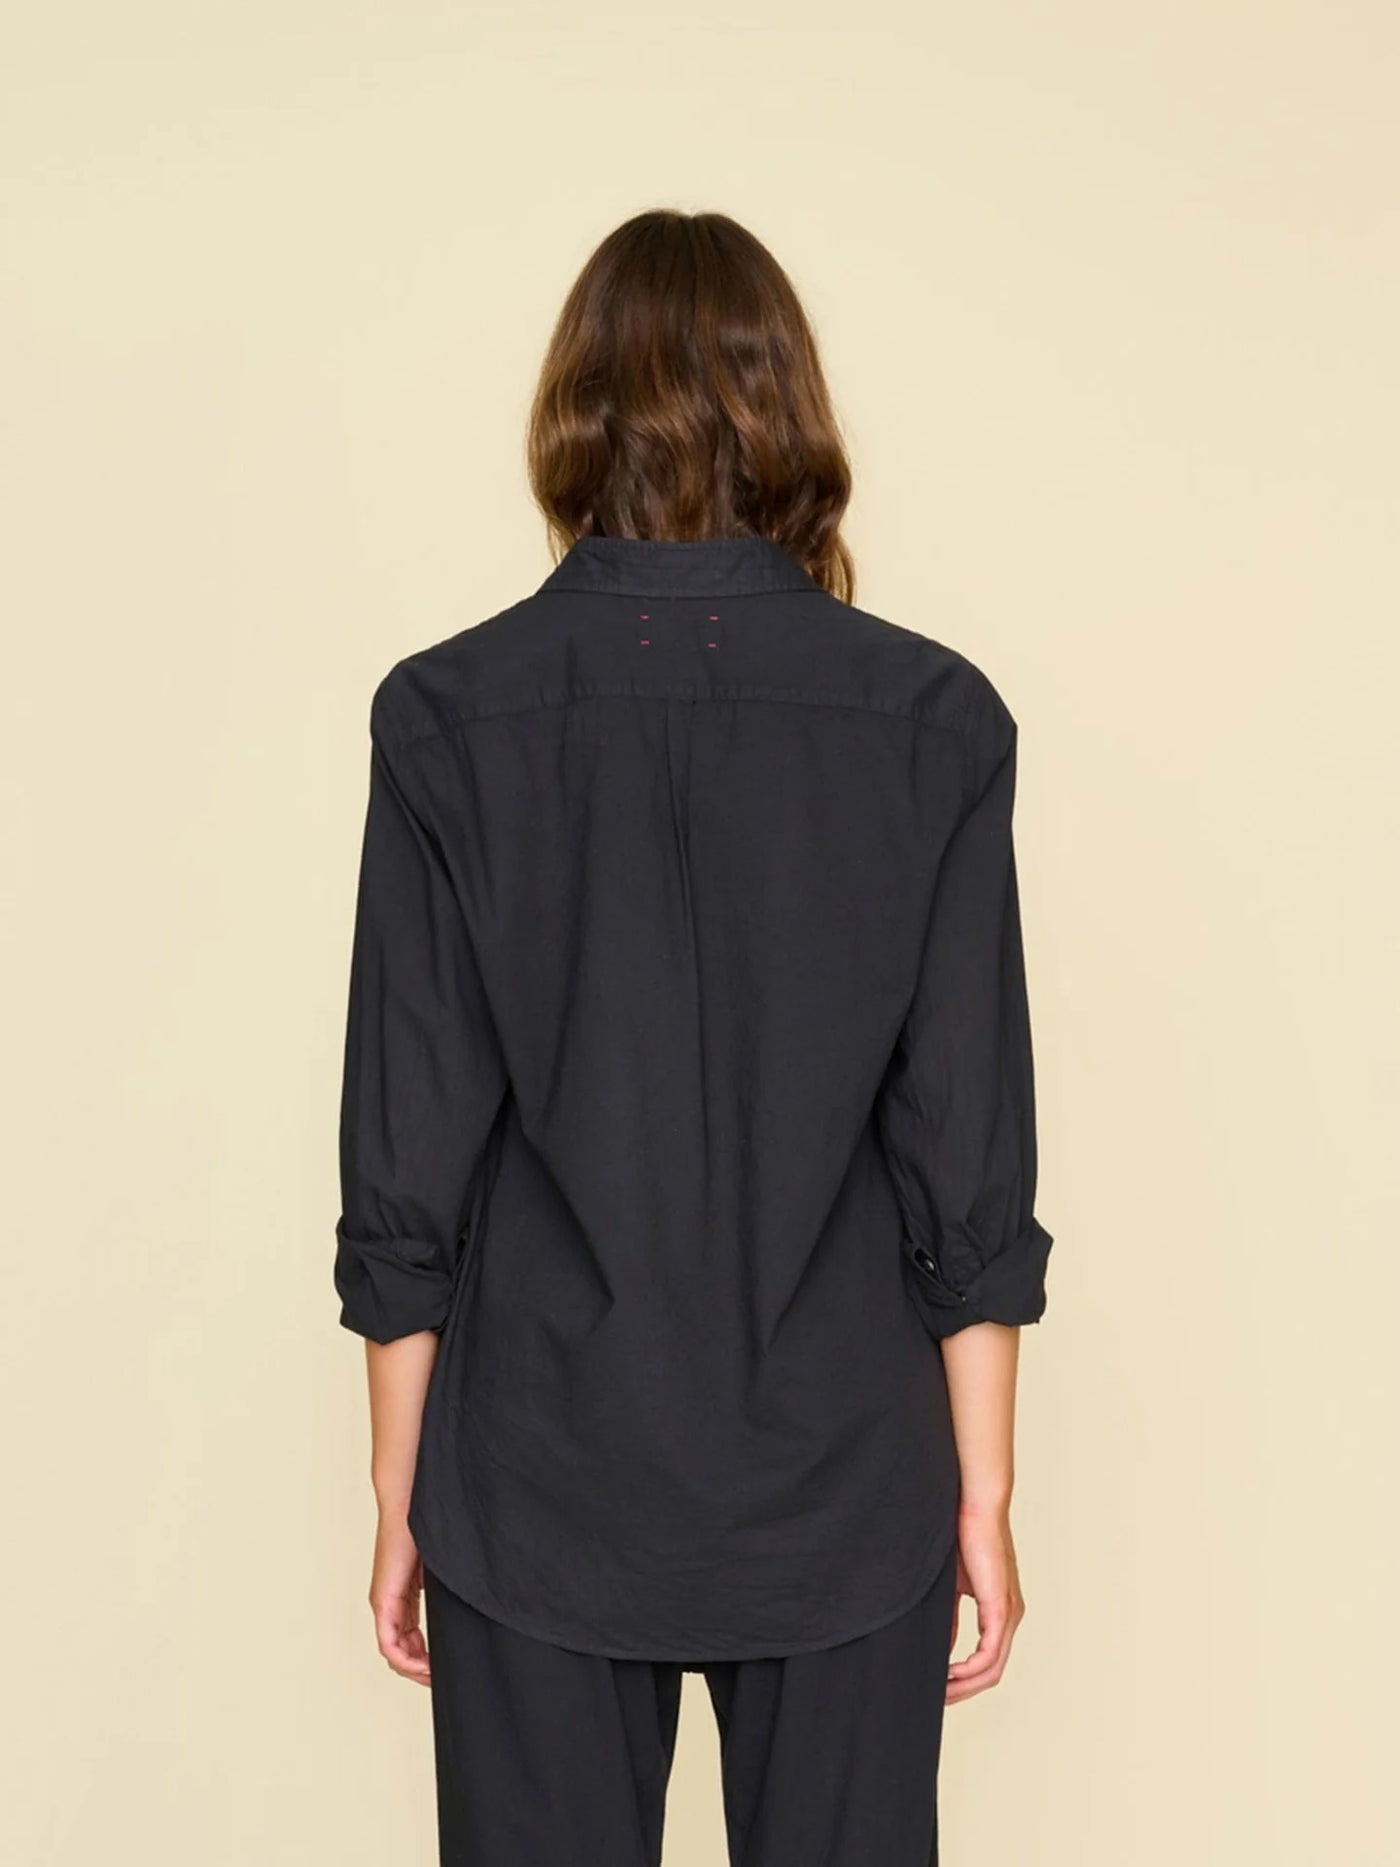 Xirena Beau Shirt in Black